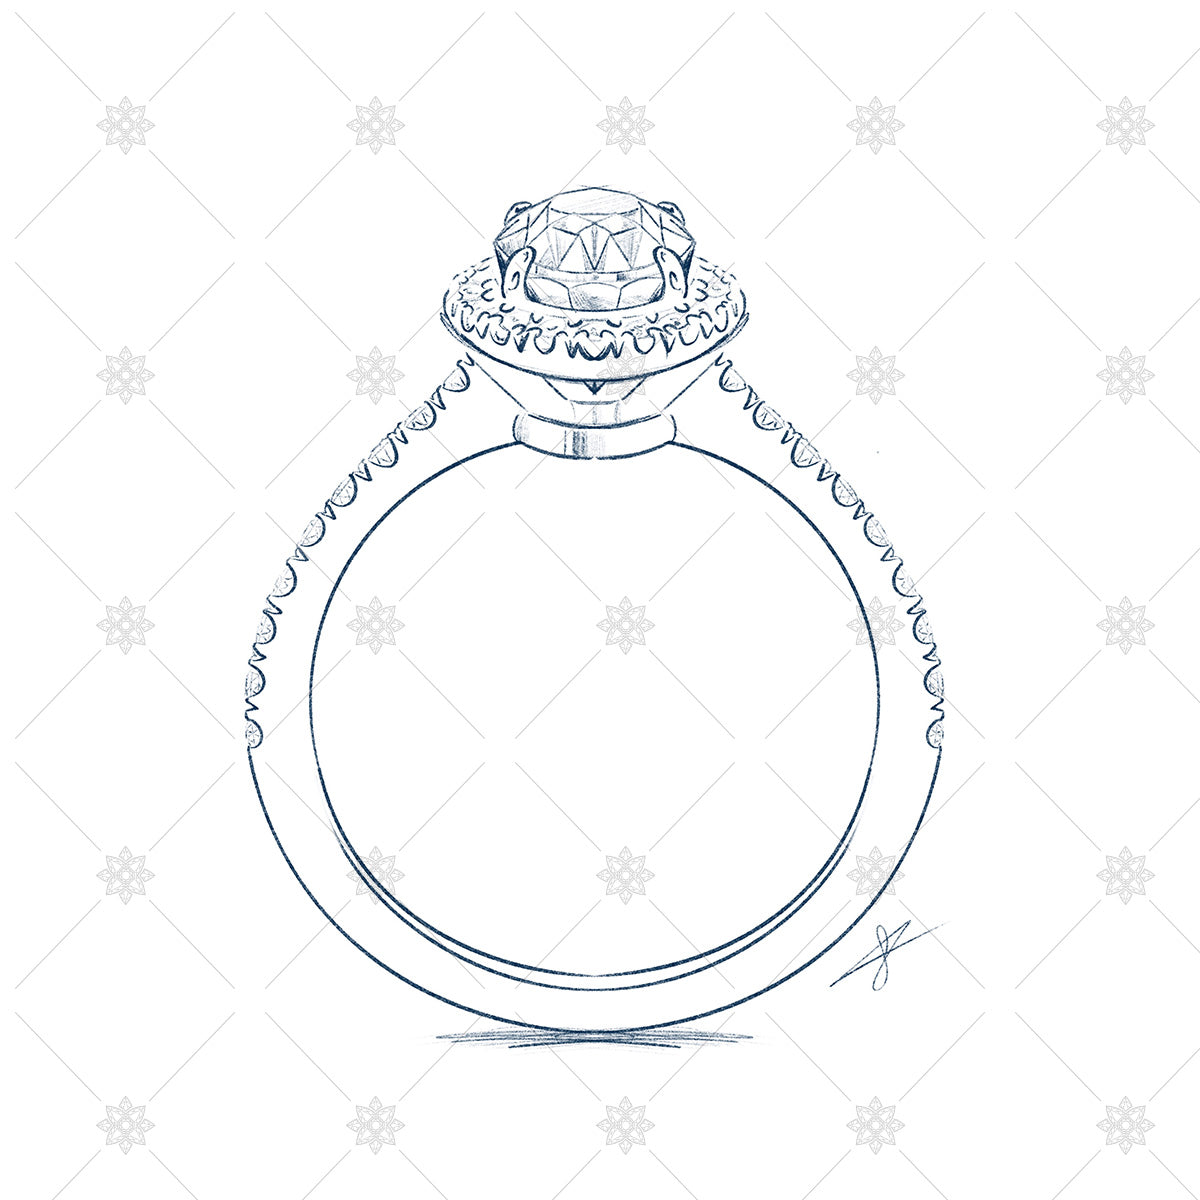 Digitally drawn diamond ring design hand drawing Vector Image